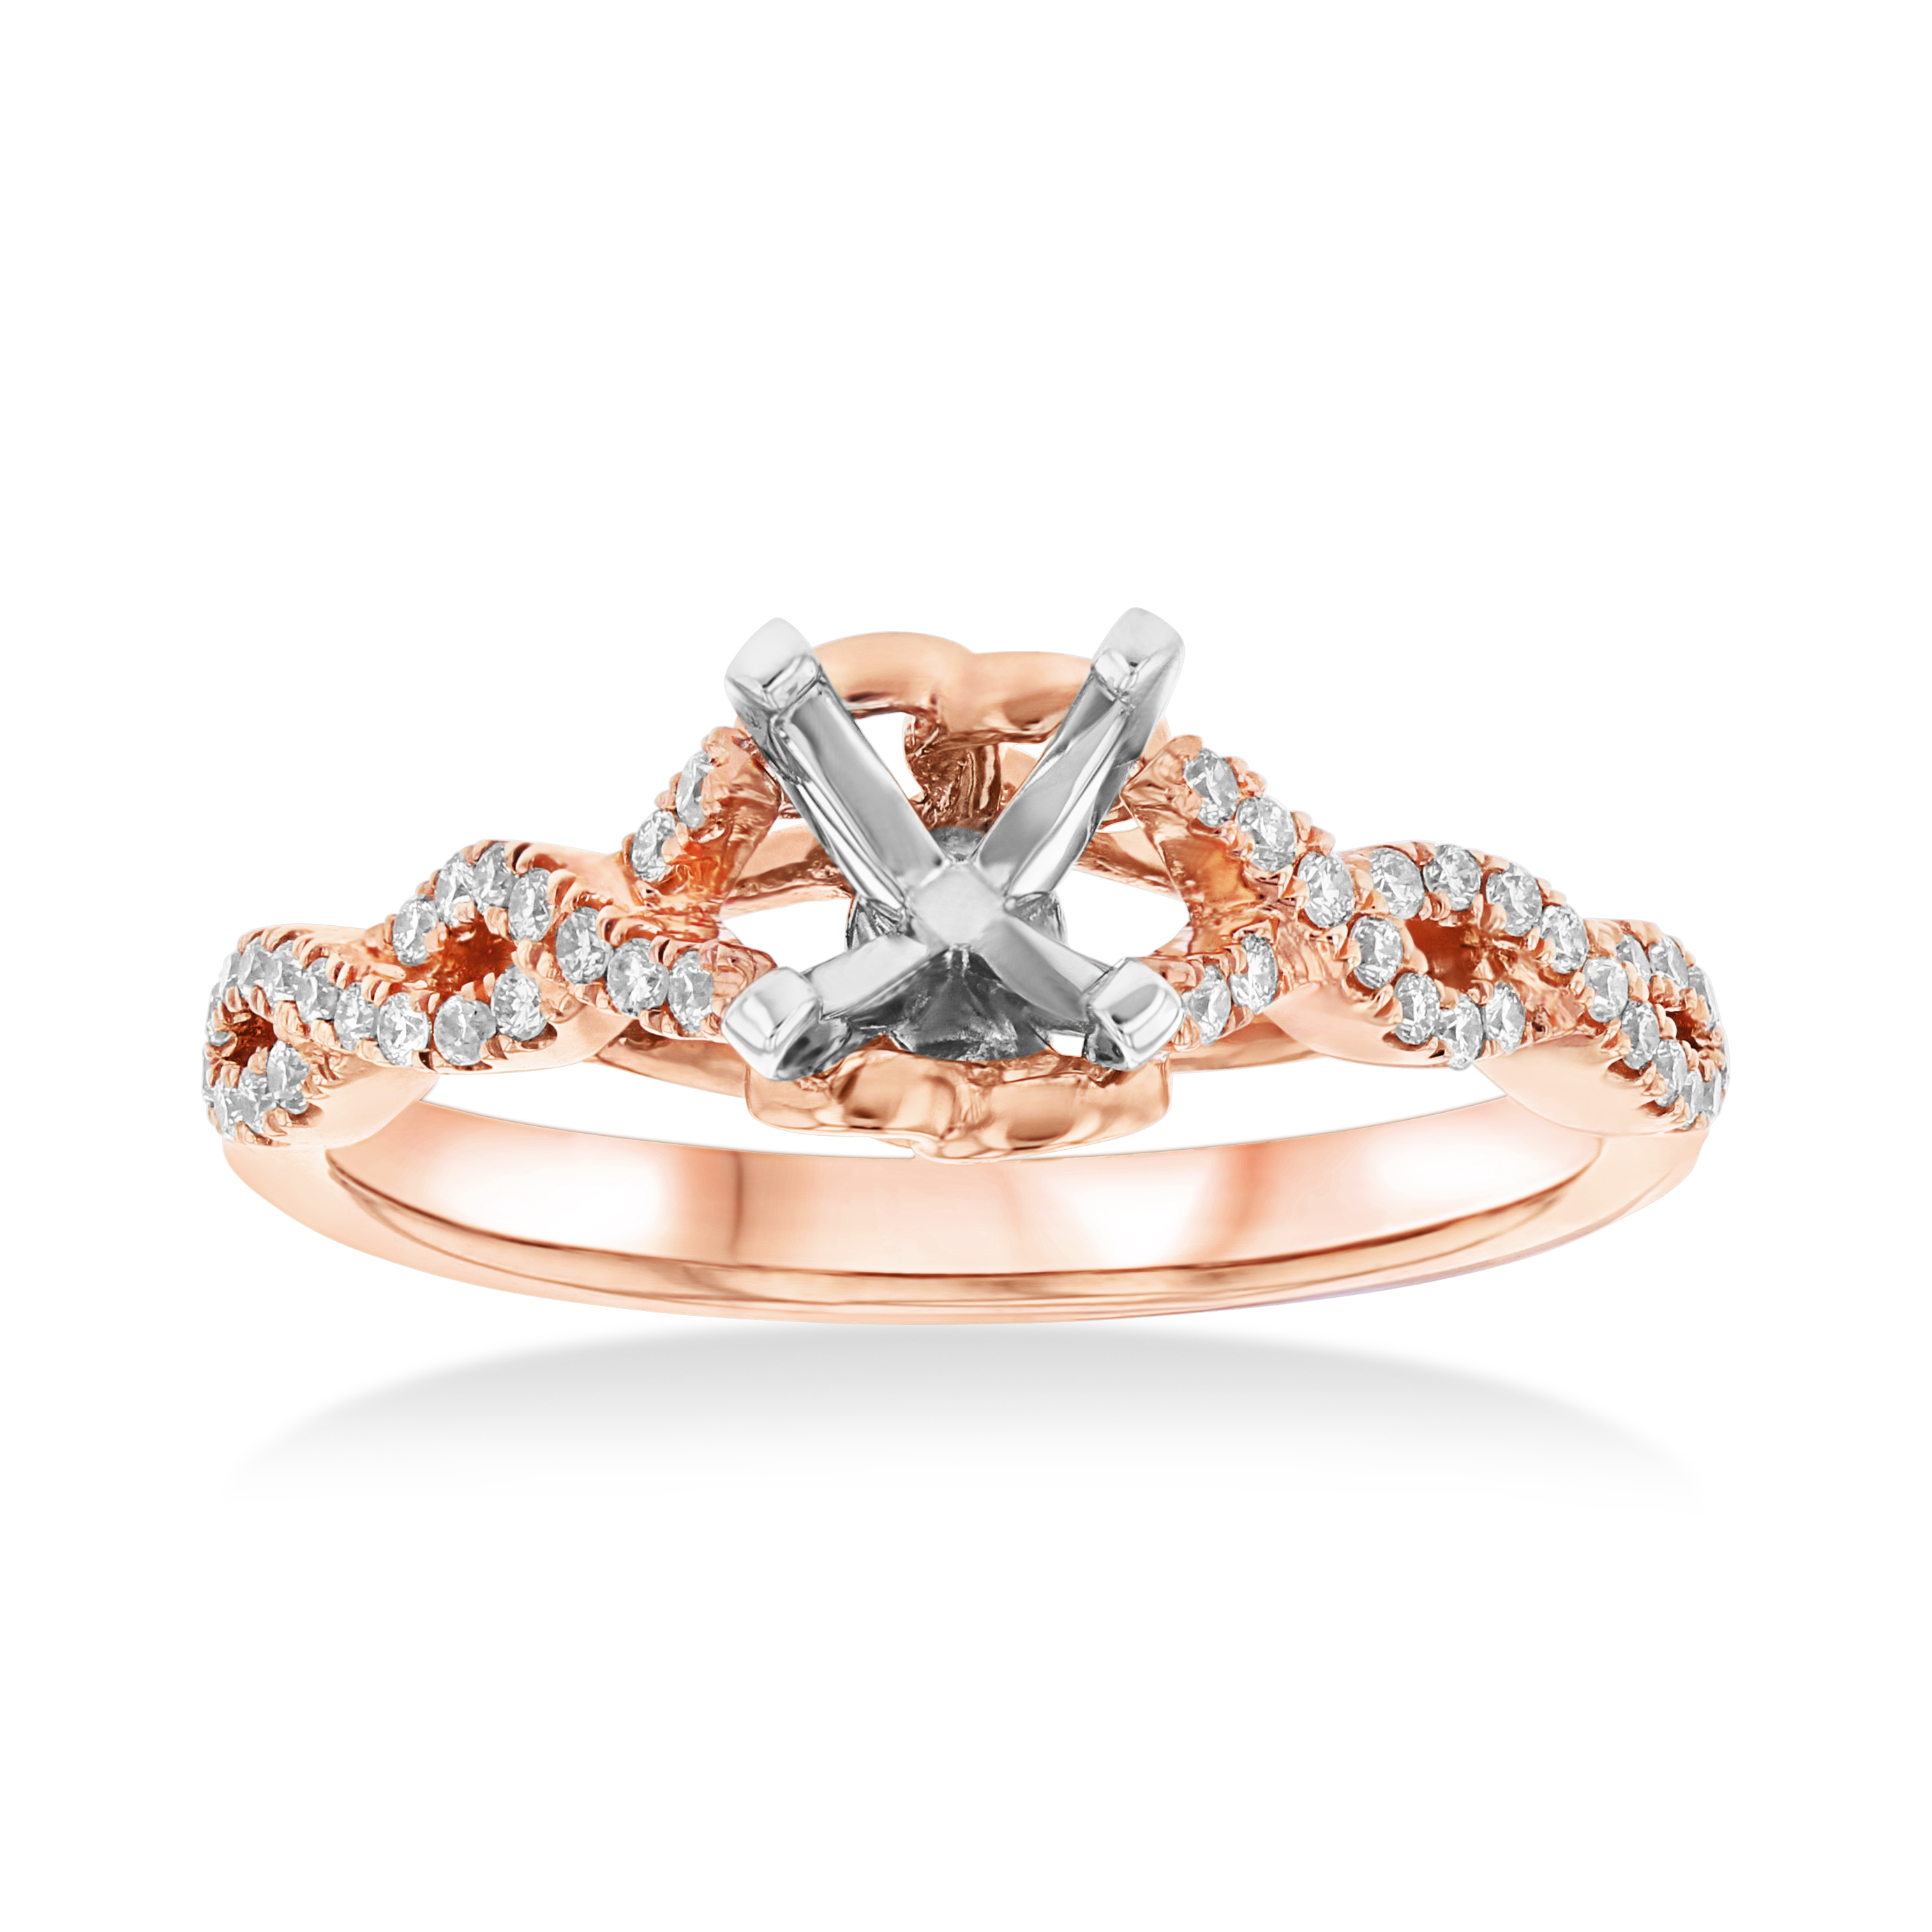 View 0.20ctw Diamond Semi Mount Engagement Ring in 14k Rose Gold